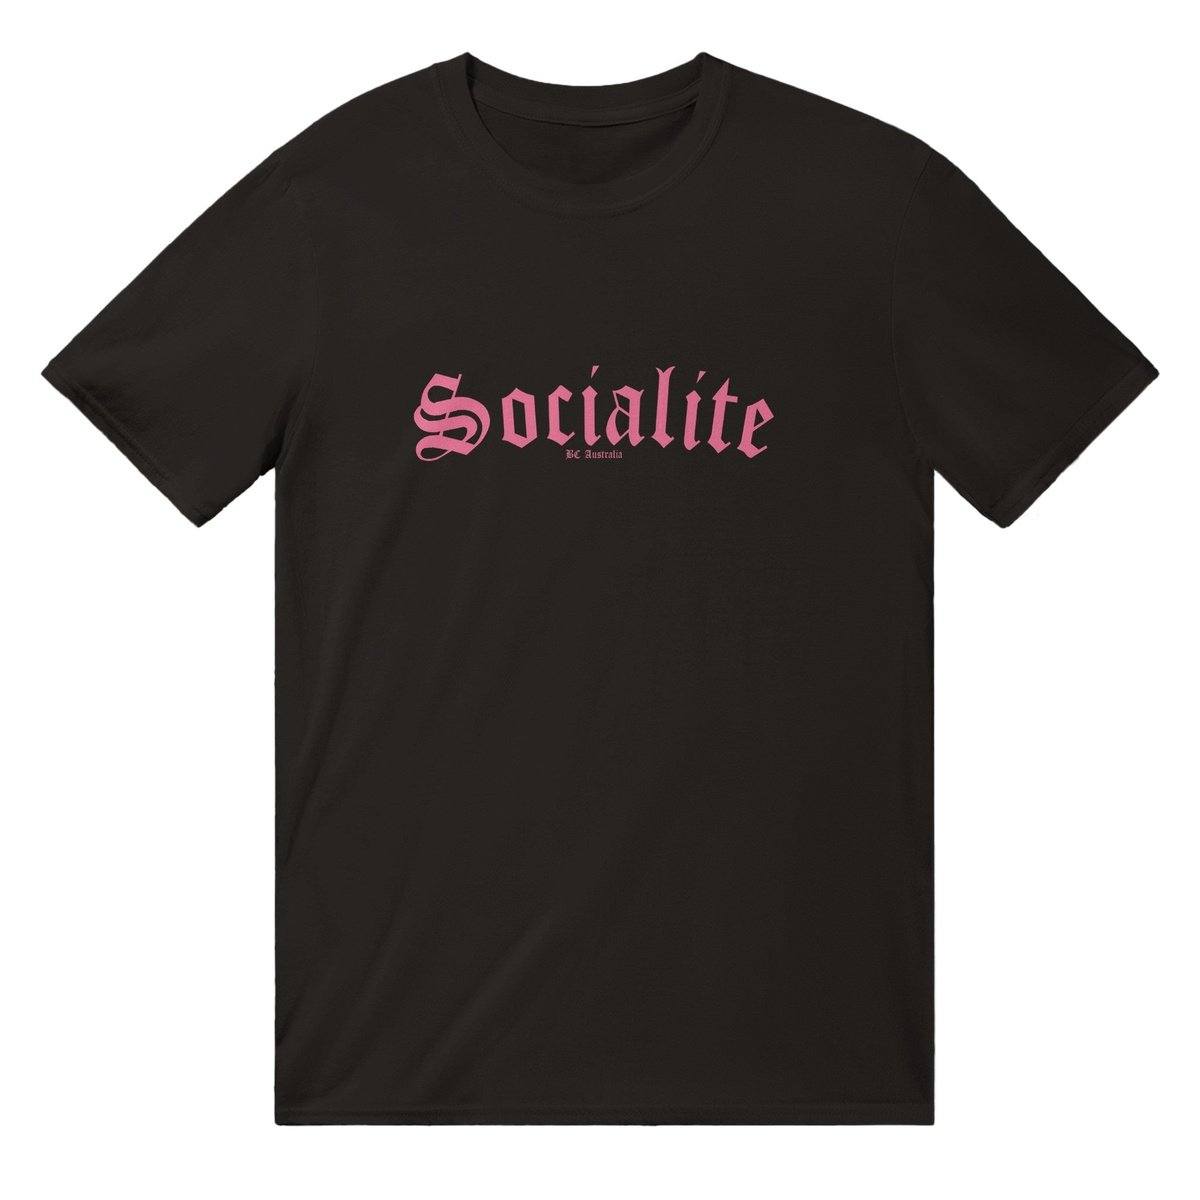 Socialite T-Shirt Australia Online Color Black / S